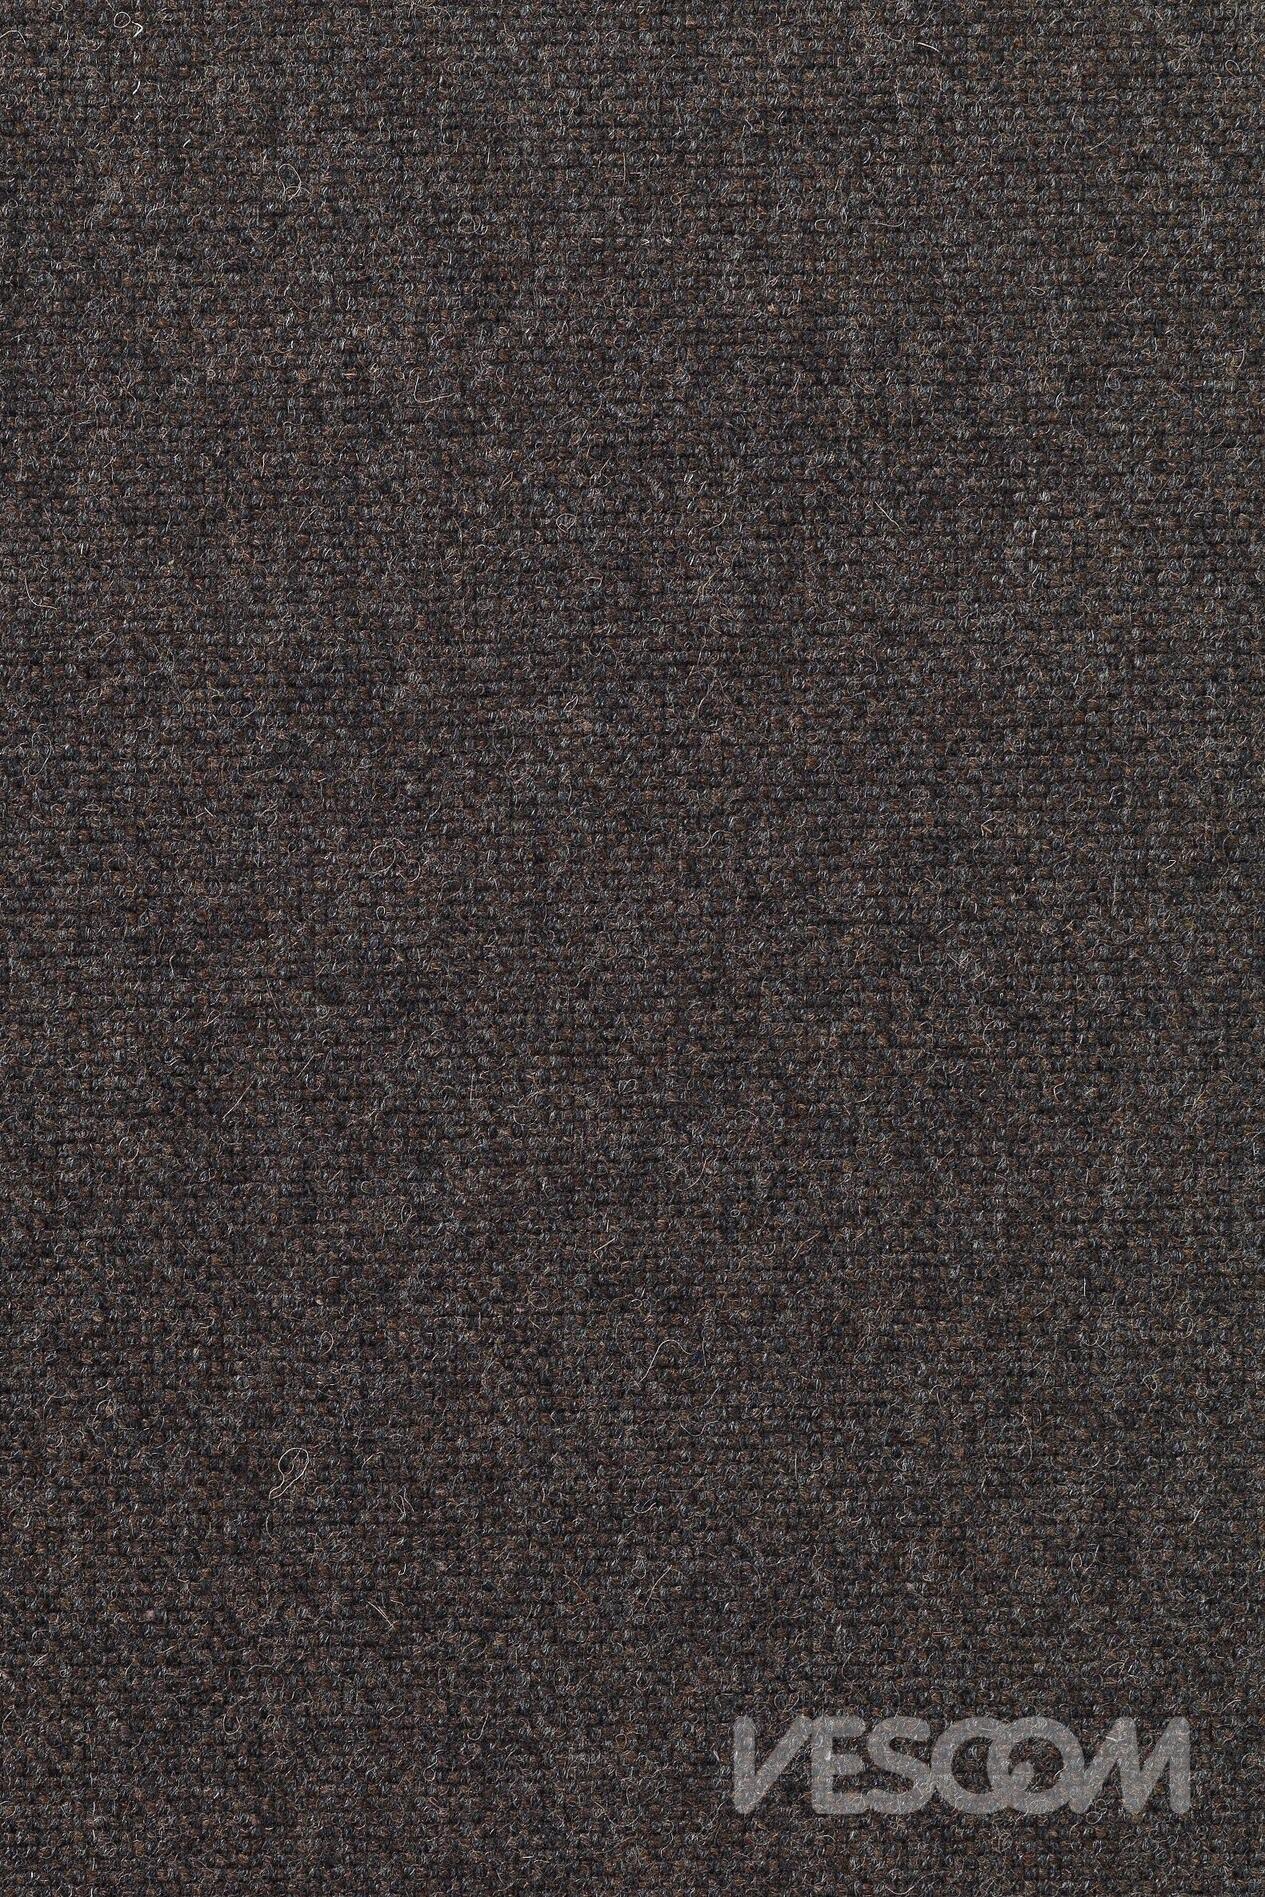 Vescom-Wolin-Upholstery-Fabric-7050.18.jpg